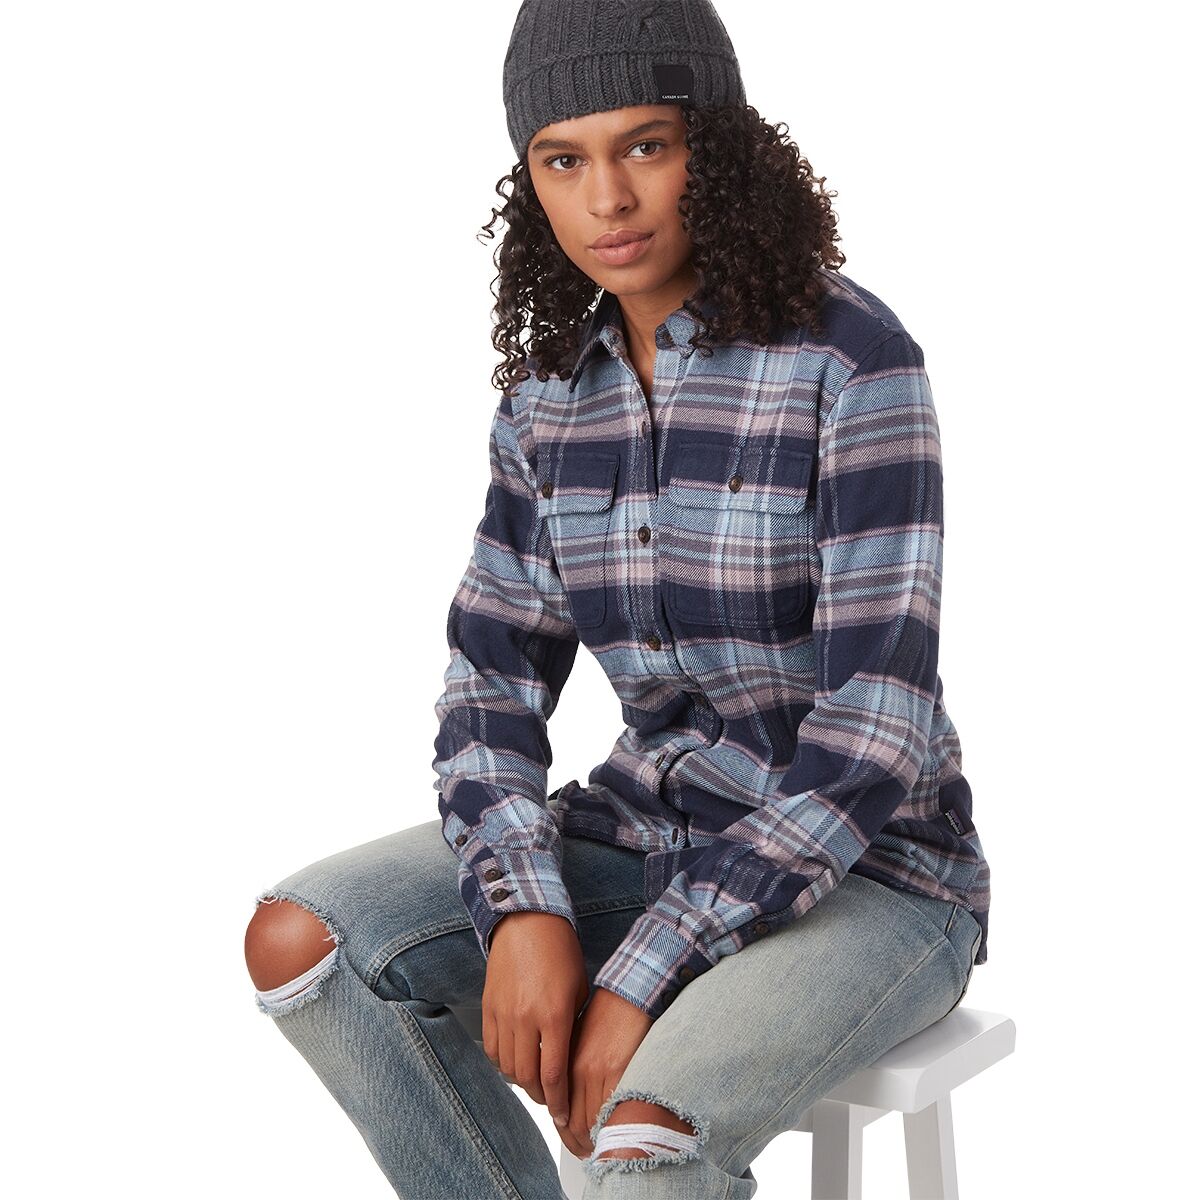 Fjord Long-Sleeve Flannel Shirt - Women